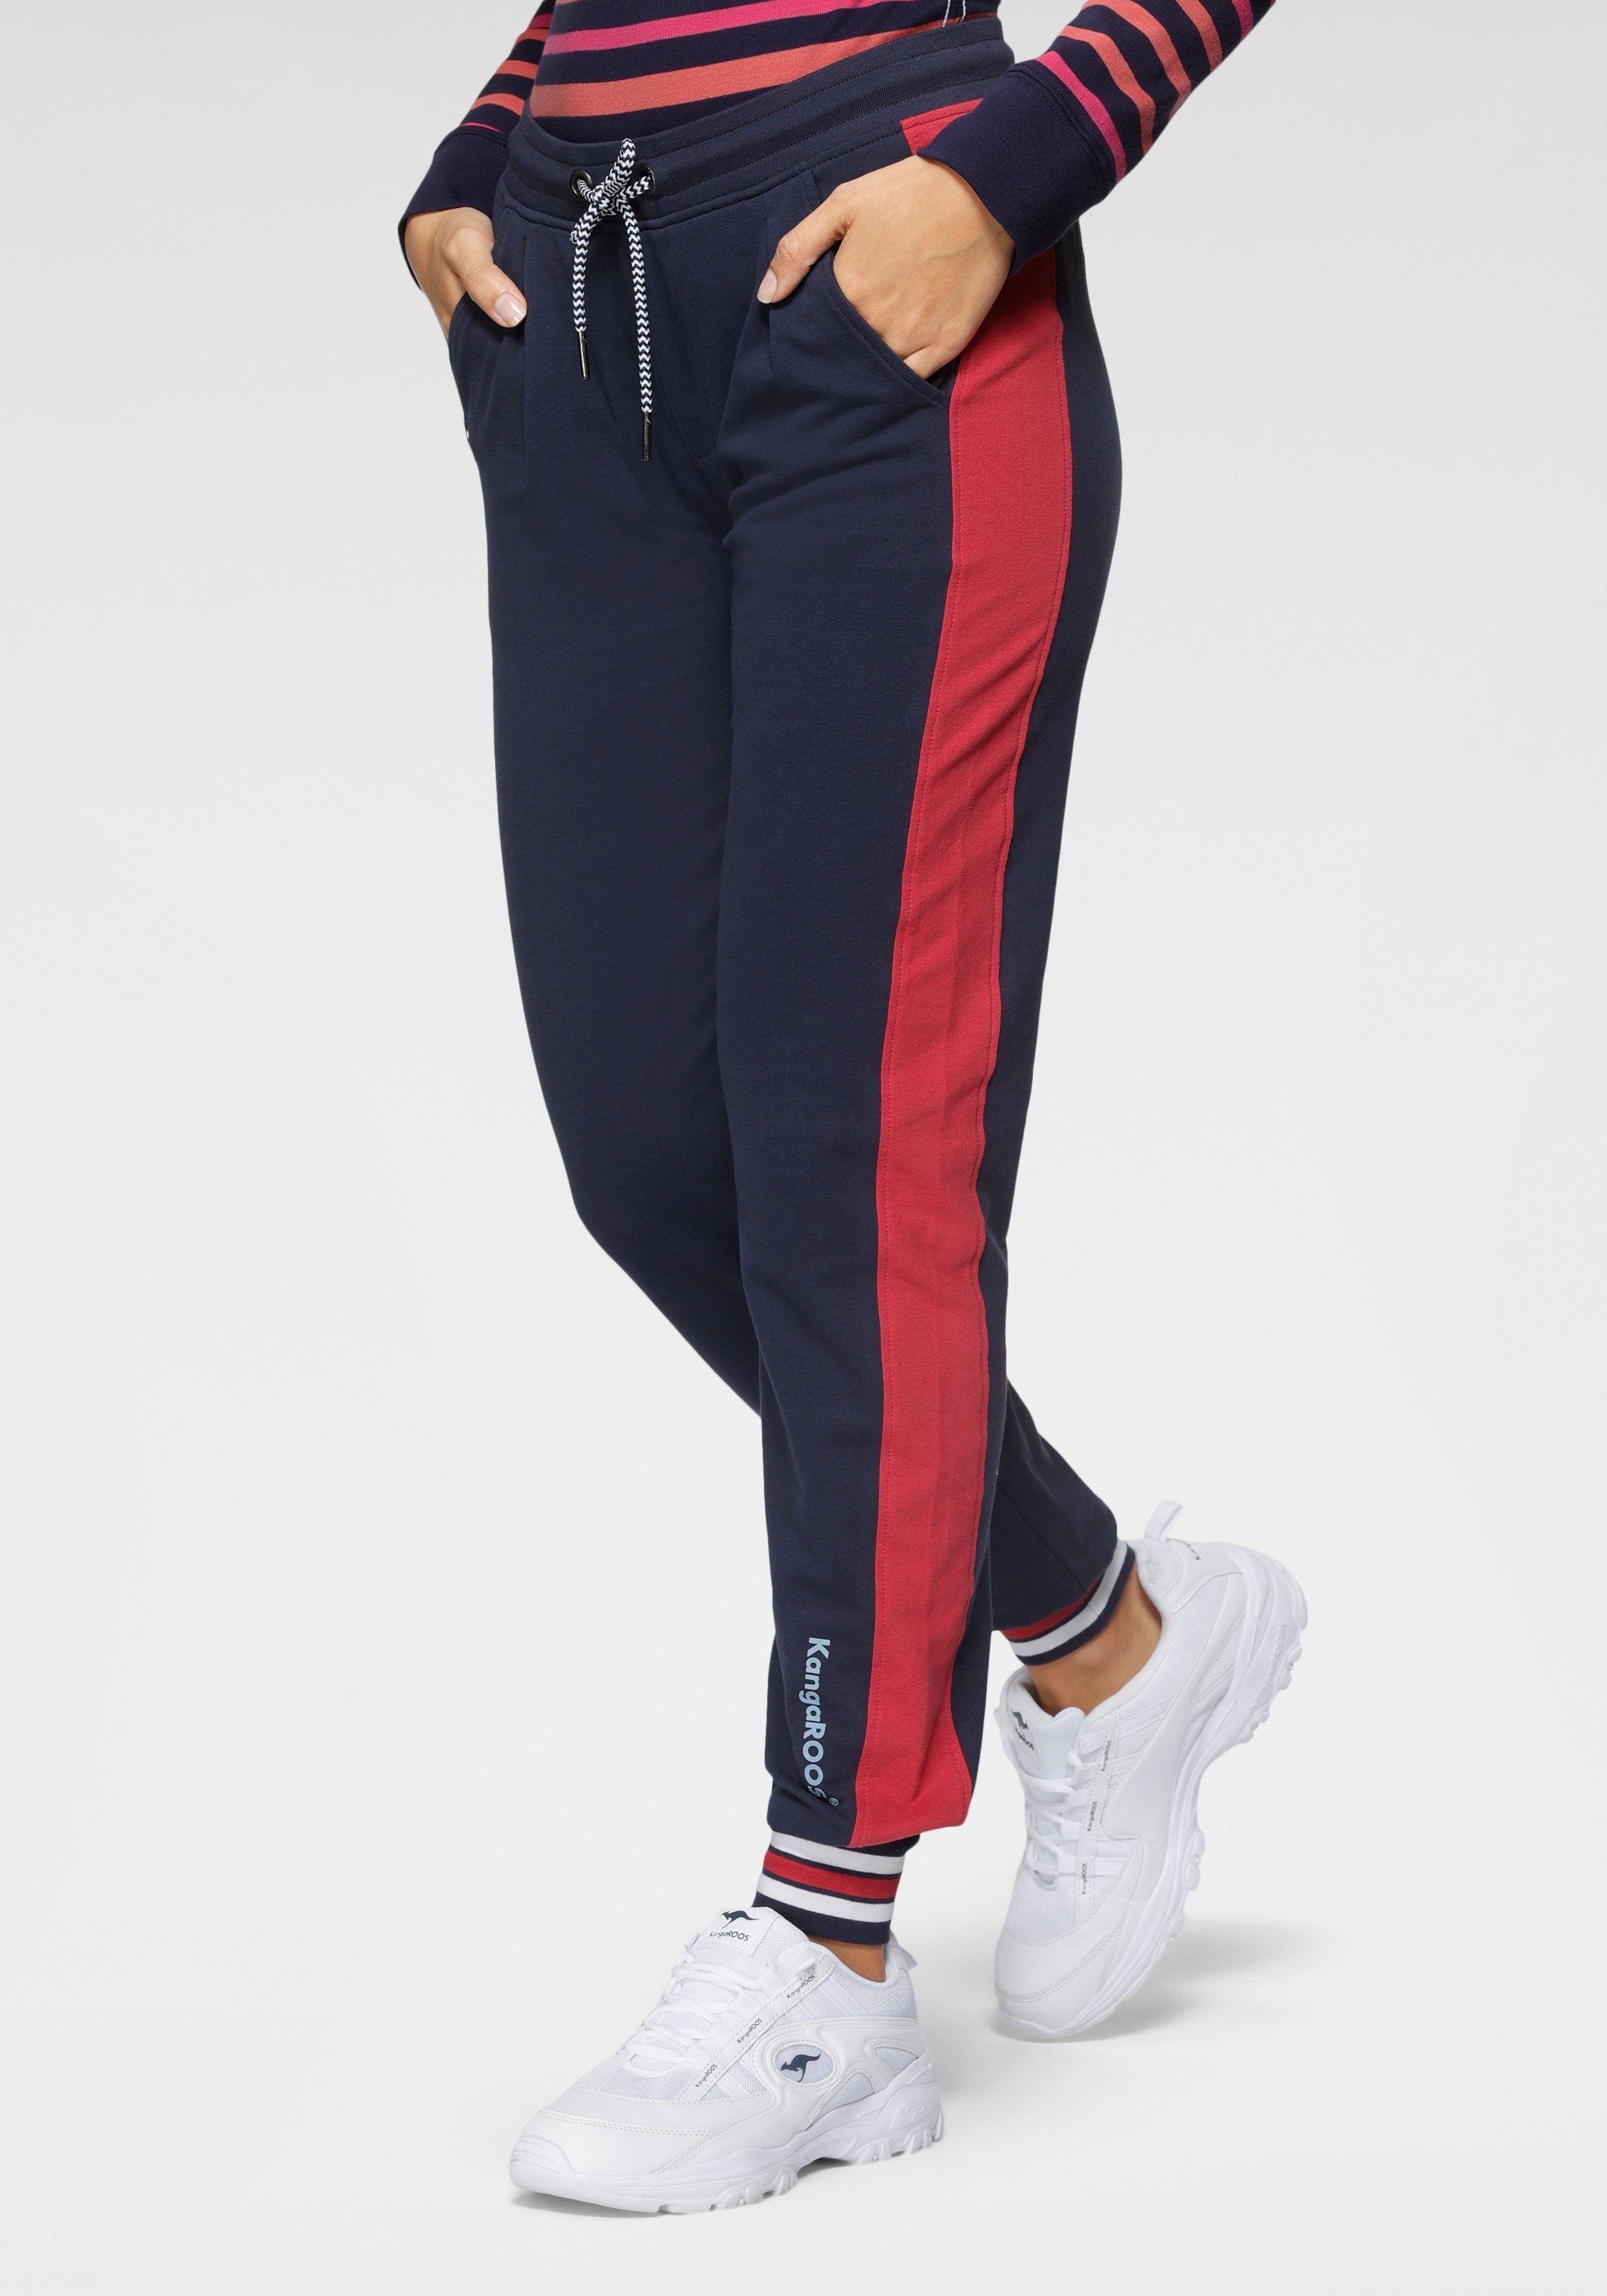 KangaROOS Damen Jogginghosen online kaufen » Sweatpants | OTTO